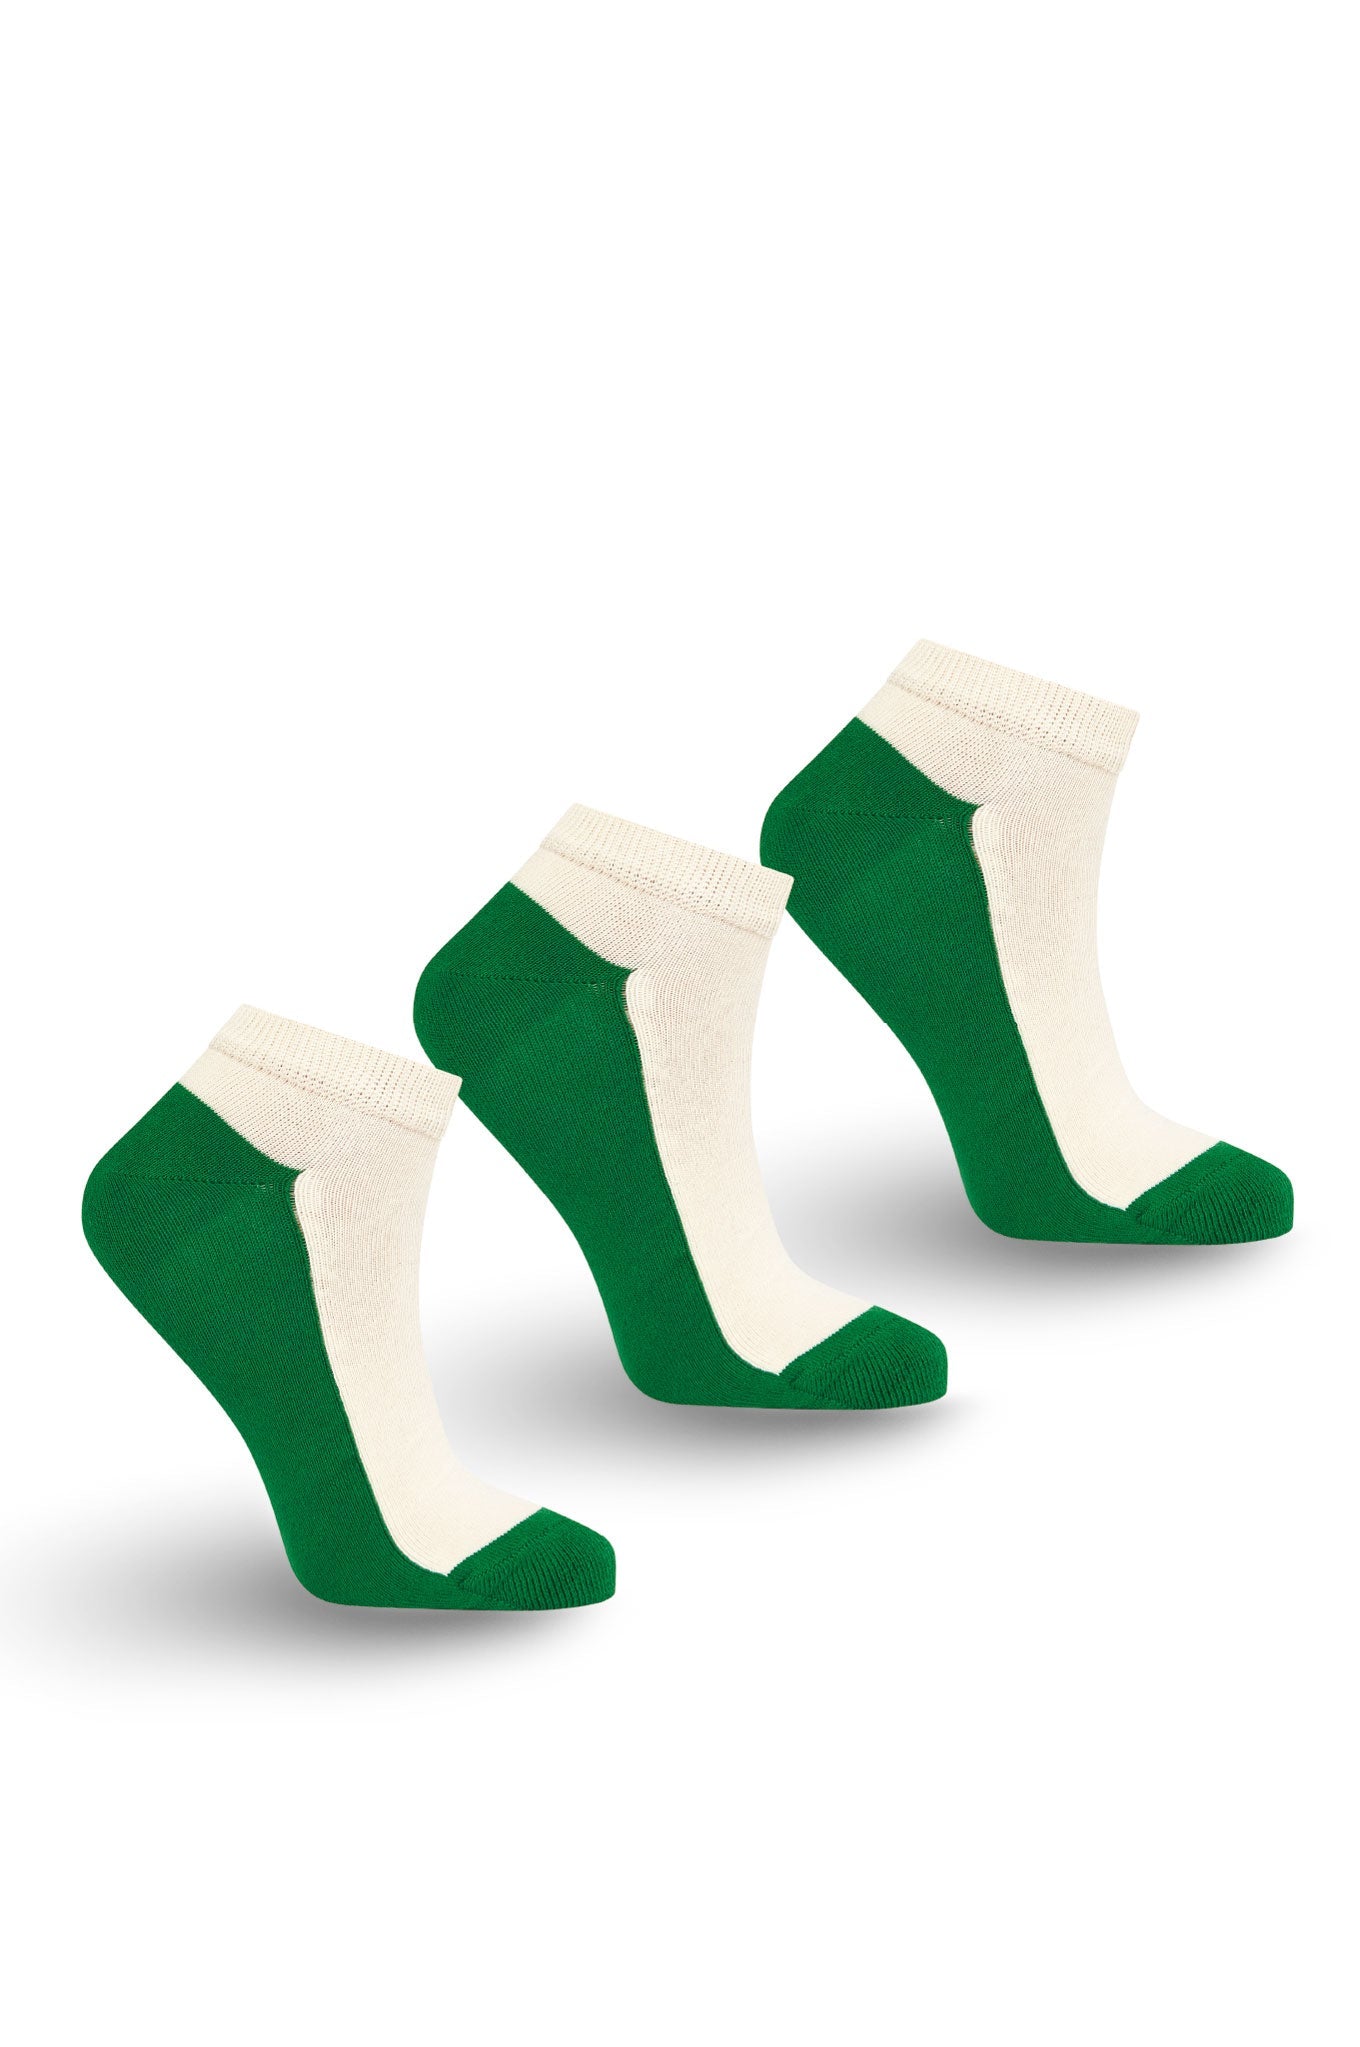 ANKLE Box Set (x3 pairs) - Organic Cotton Socks White